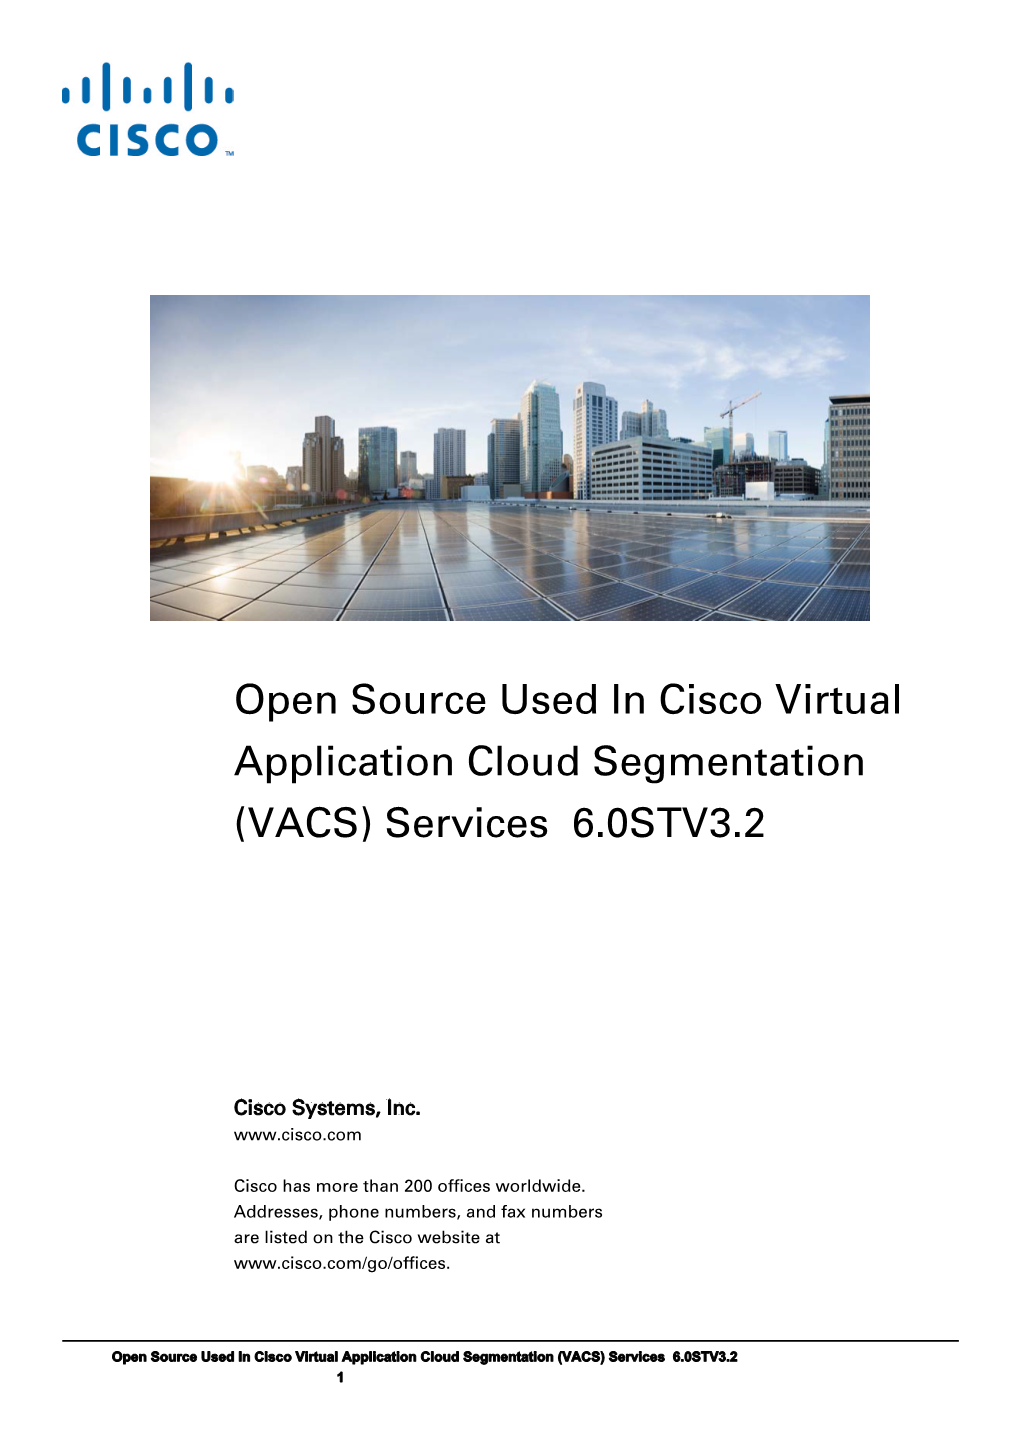 Open Source Used in Cisco Virtual Application Cloud Segmentation (VACS) Services 6.0STV3.2